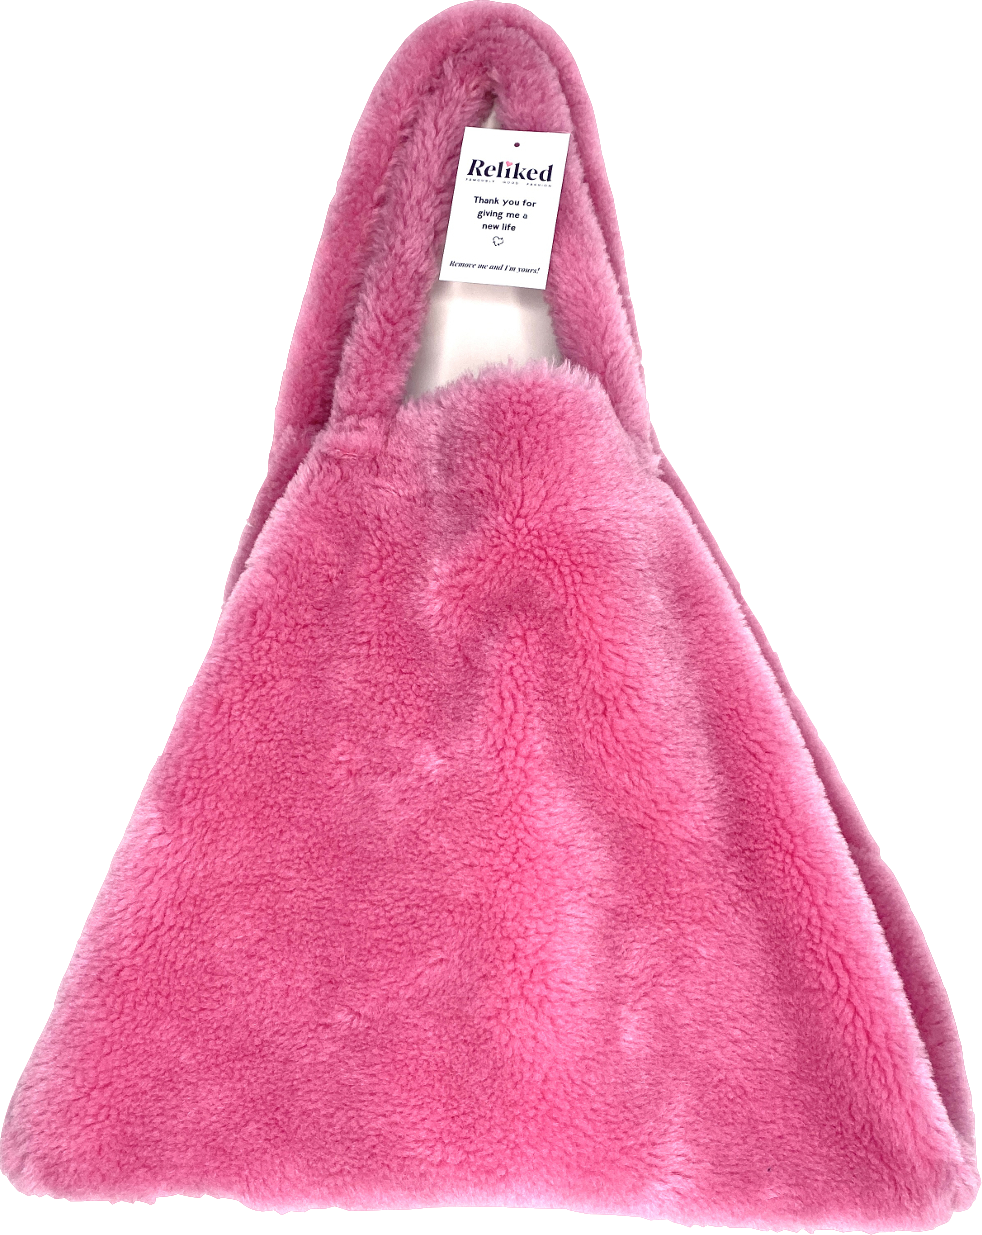 Popski Pink Teddy wool shearling Bear Bag